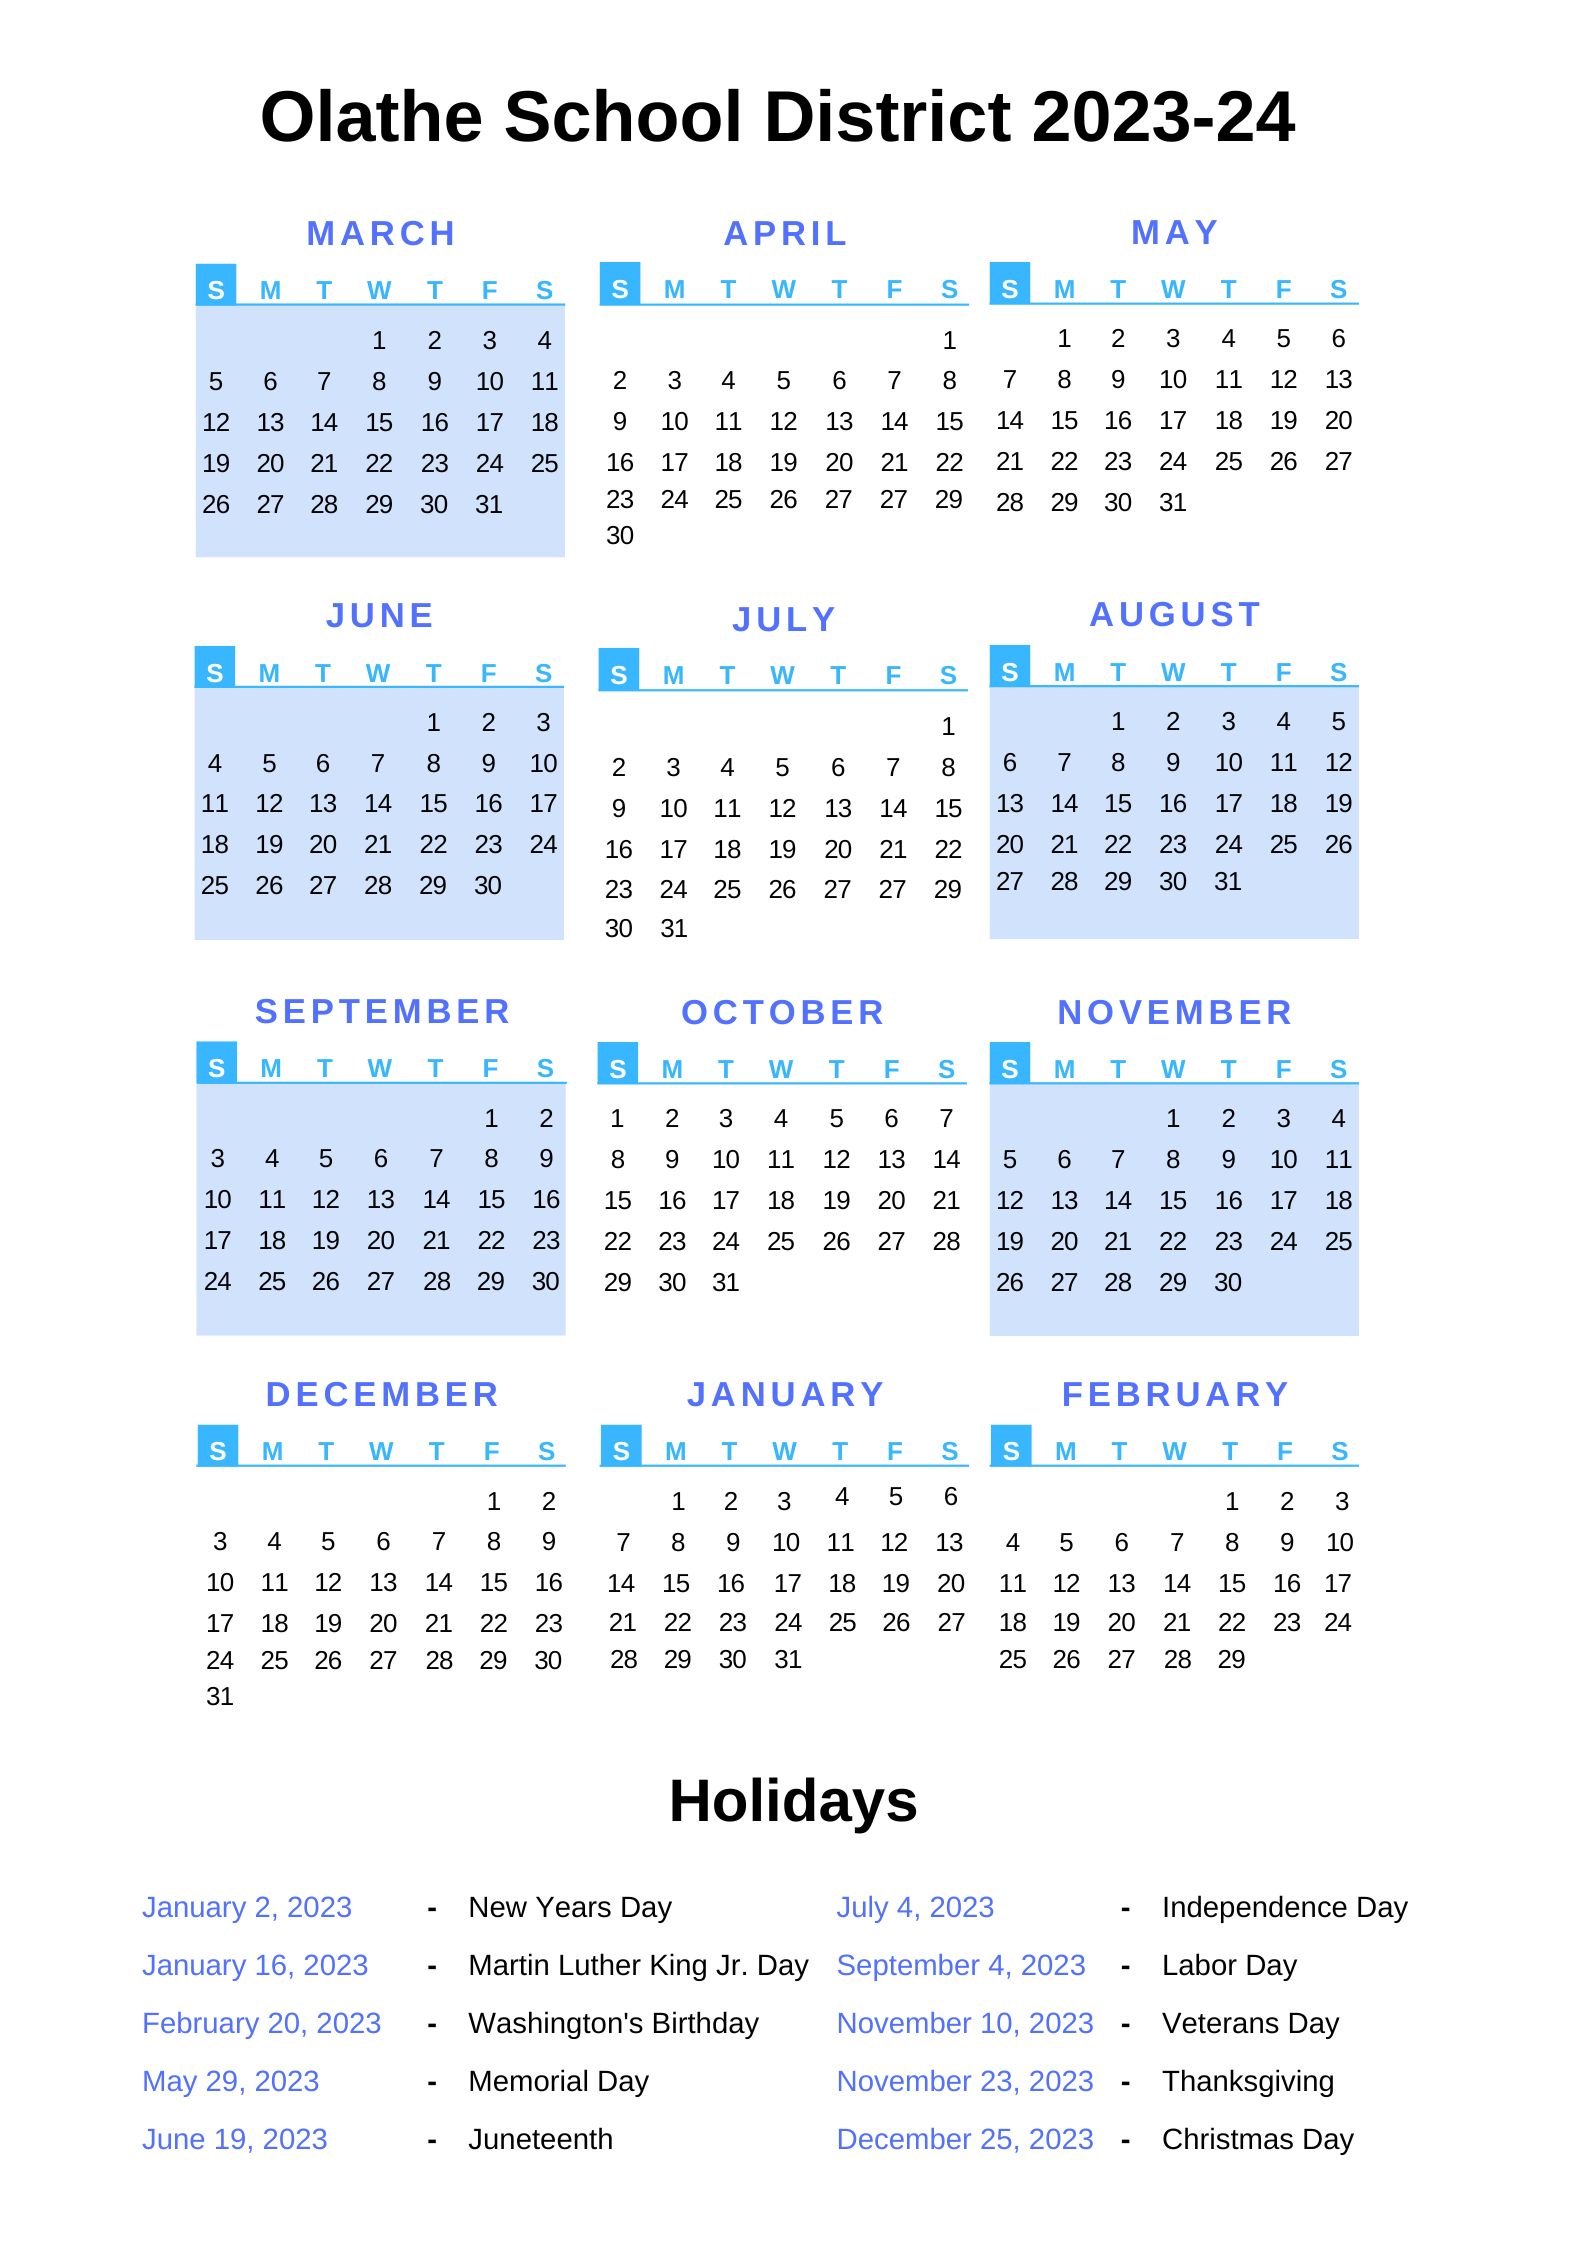 Olathe School District Calendar 202324 with Holidays